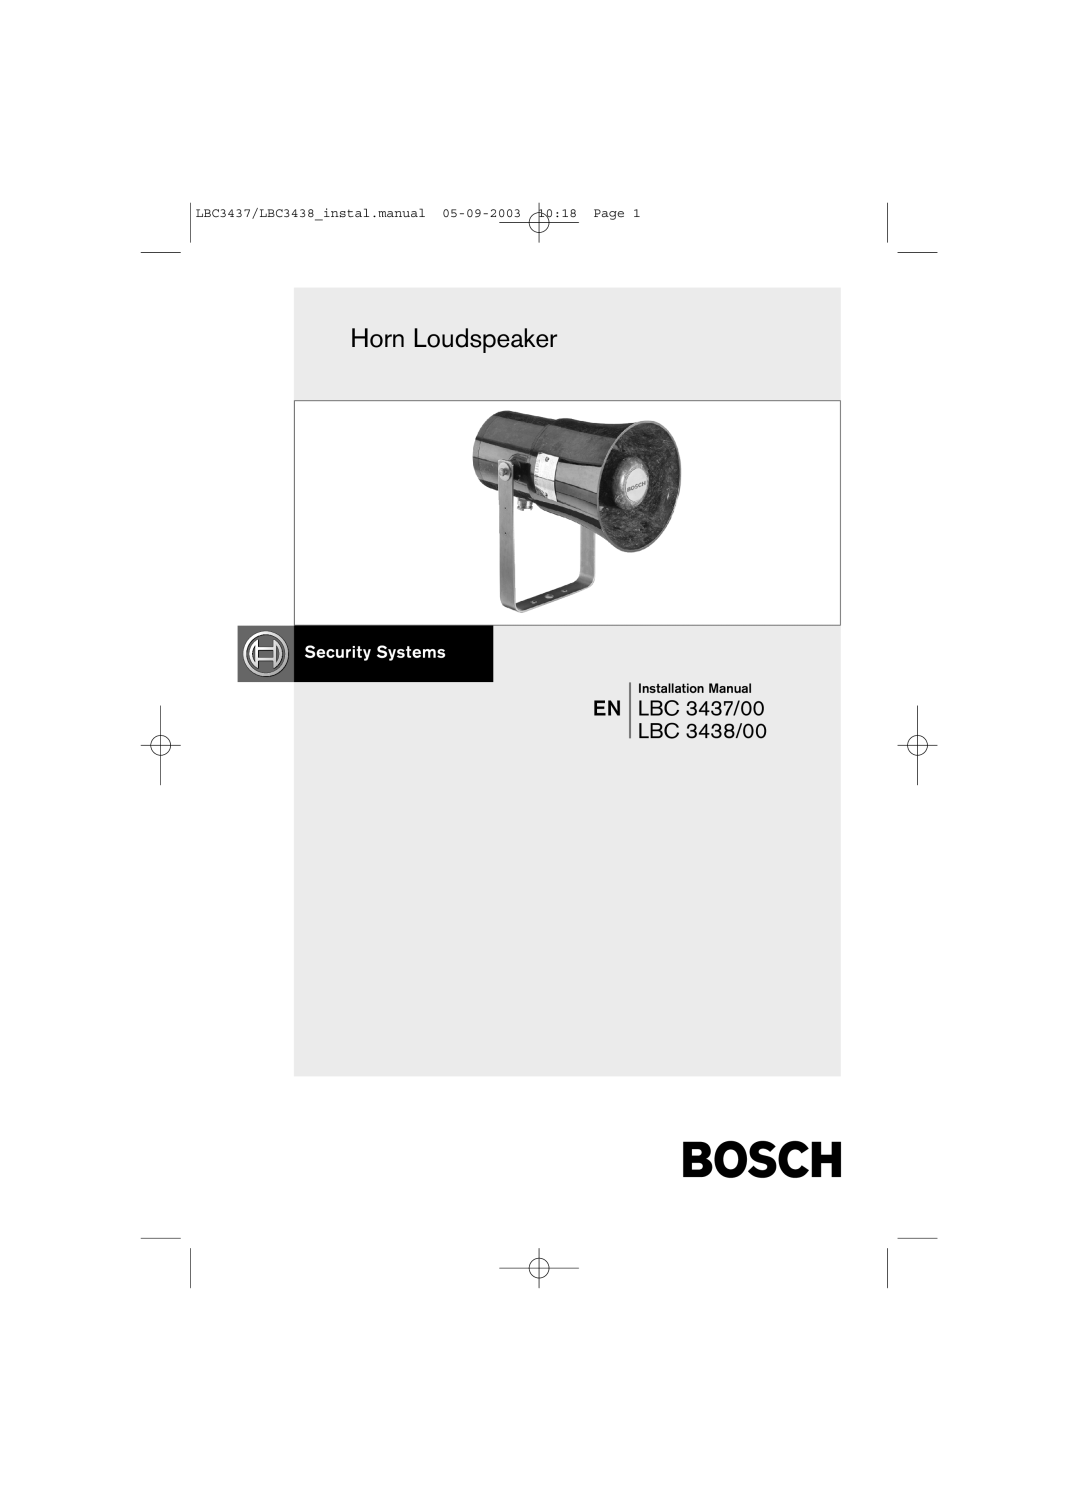 Bosch Appliances installation manual Horn Loudspeaker, EN LBC 3437/00 LBC 3438/00, Installation Manual 